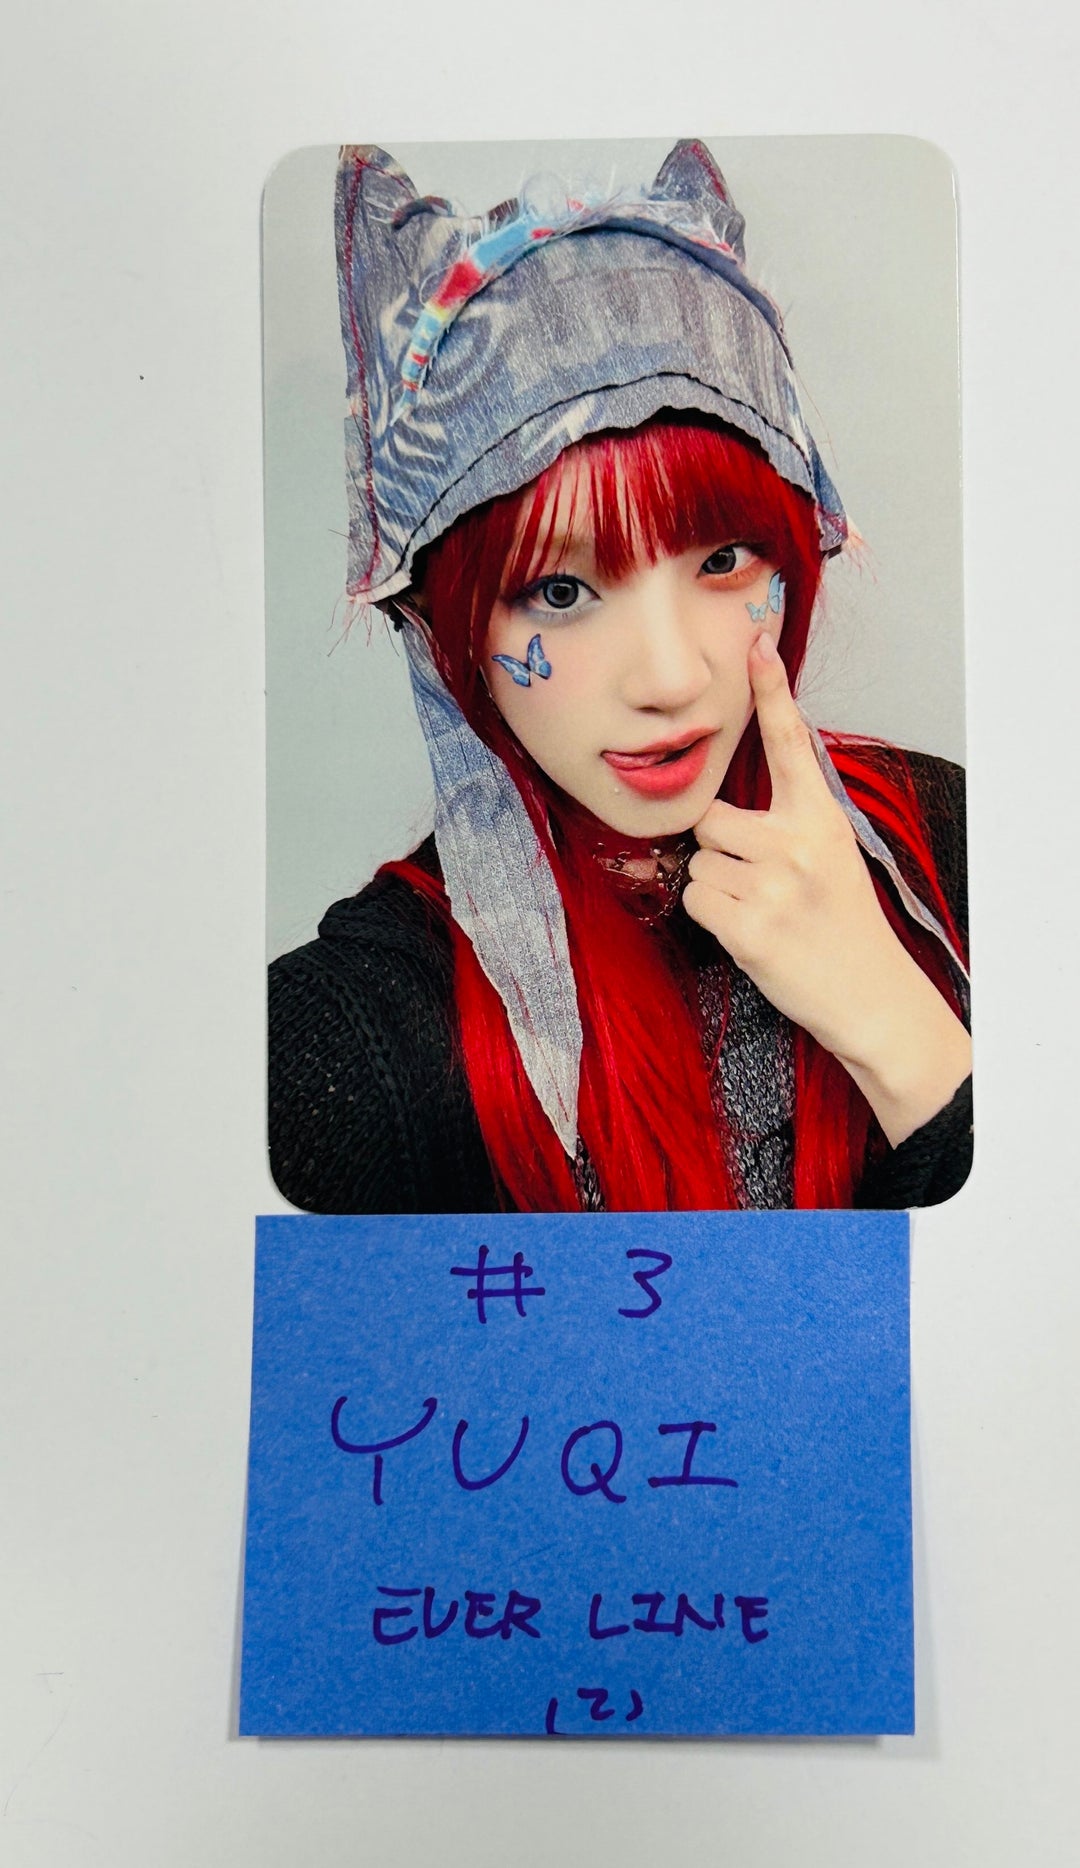 YUQI "YUQ1" - Everline Fansign Event Photocard Round 2 [24.6.10]